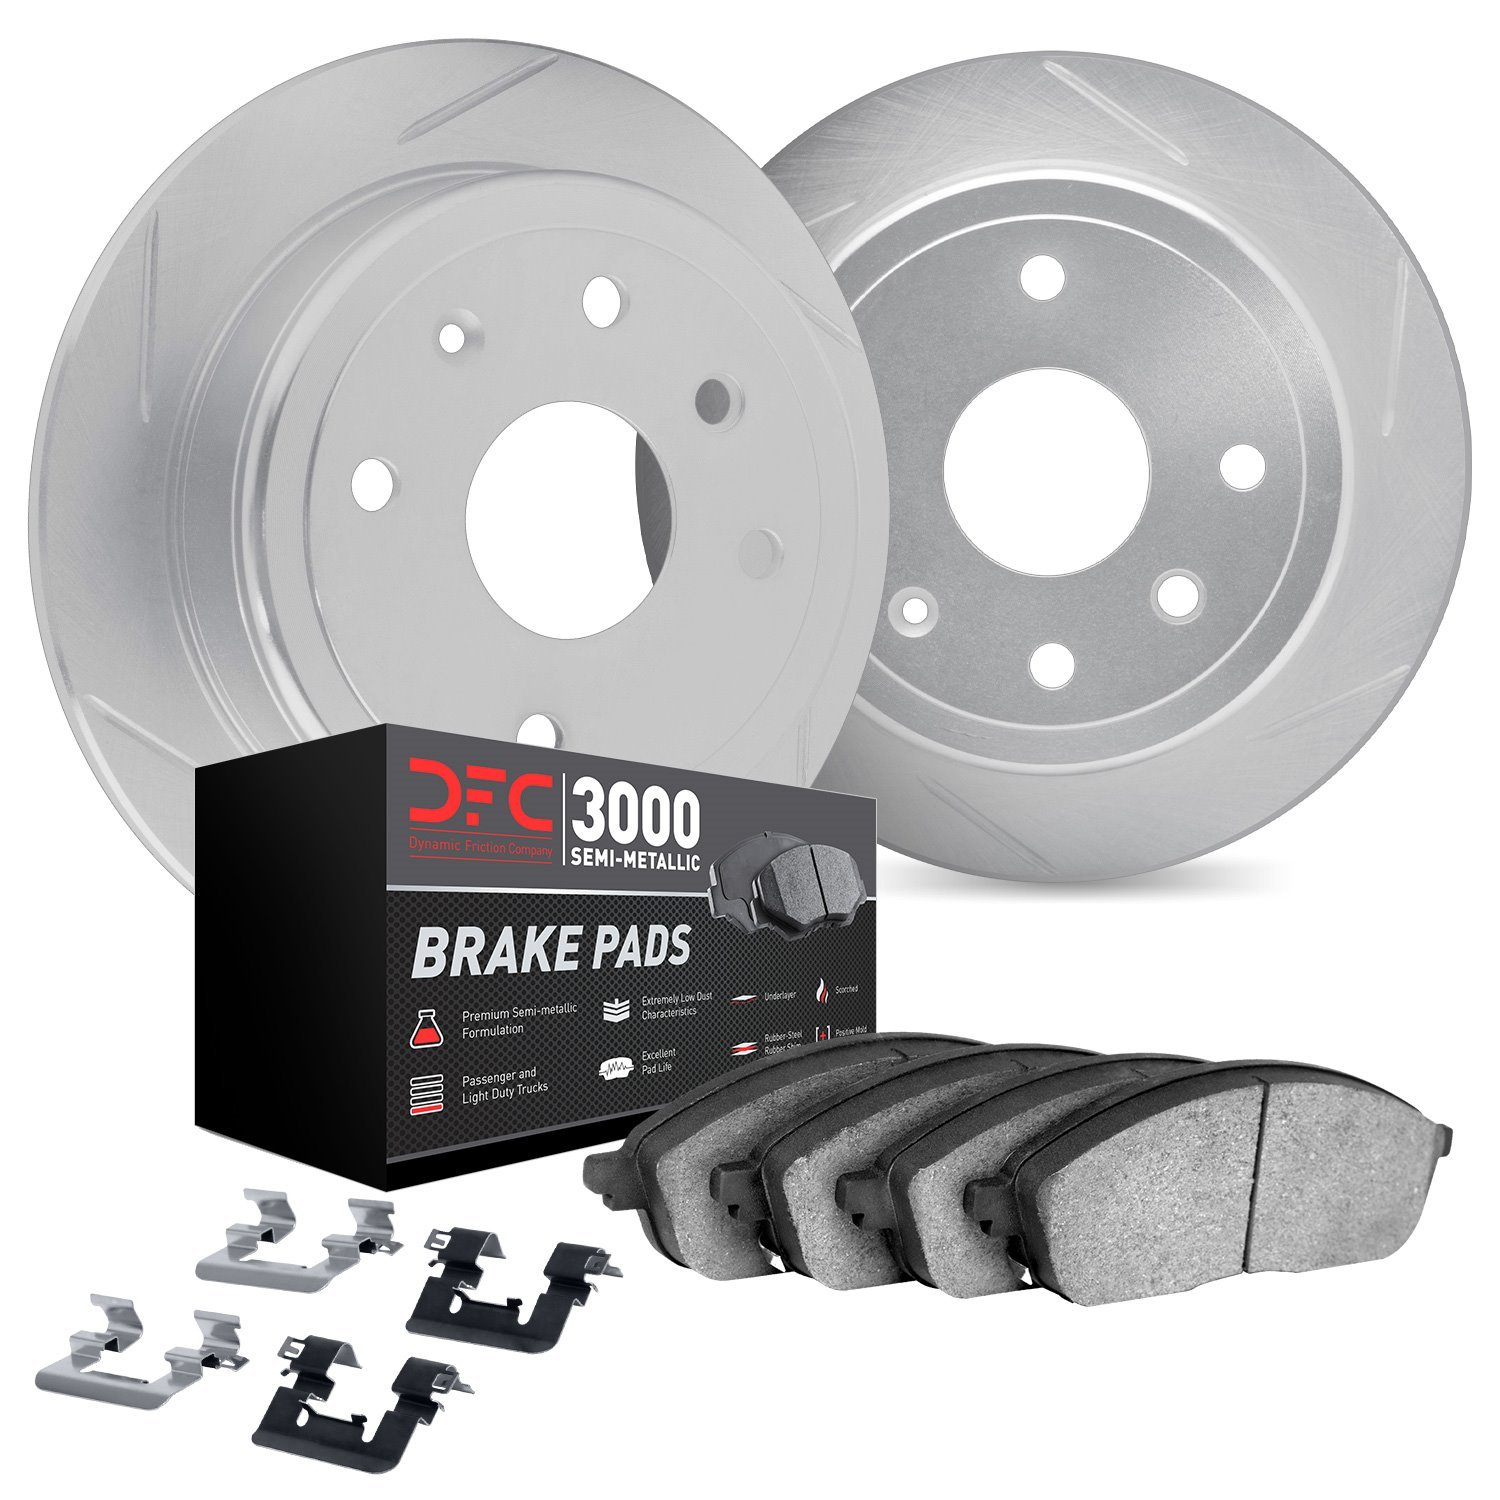 5112-11019 Slotted Brake Rotors with 3000-Series Semi-Metallic Brake Pads Kit & Hardware [Silver], 2013-2015 Land Rover, Positio